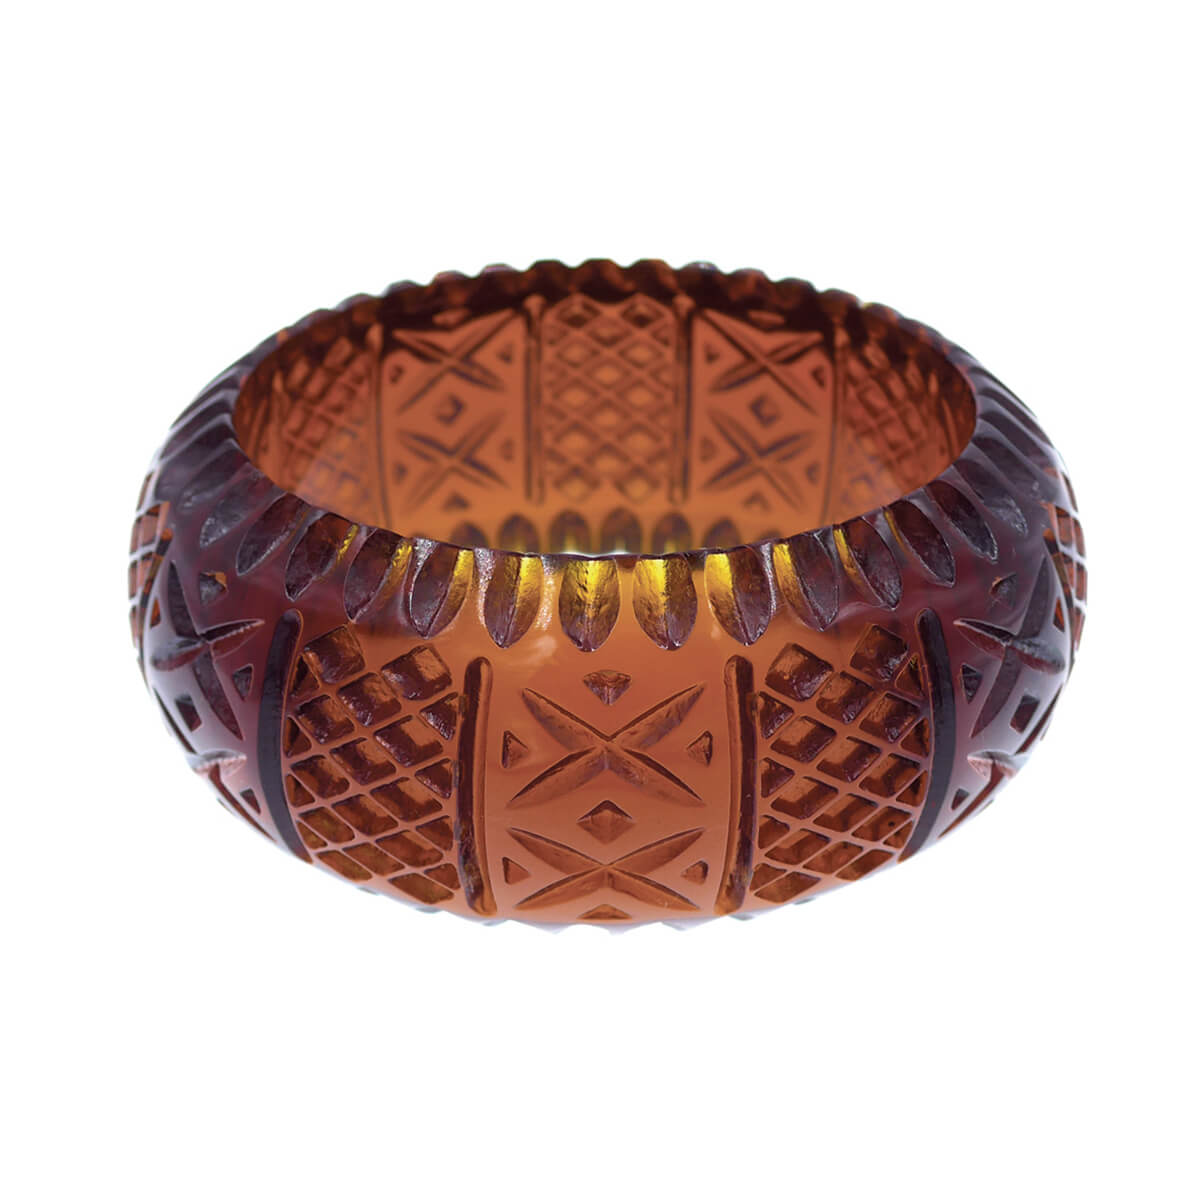 douglaspoon hand carved resin bangle